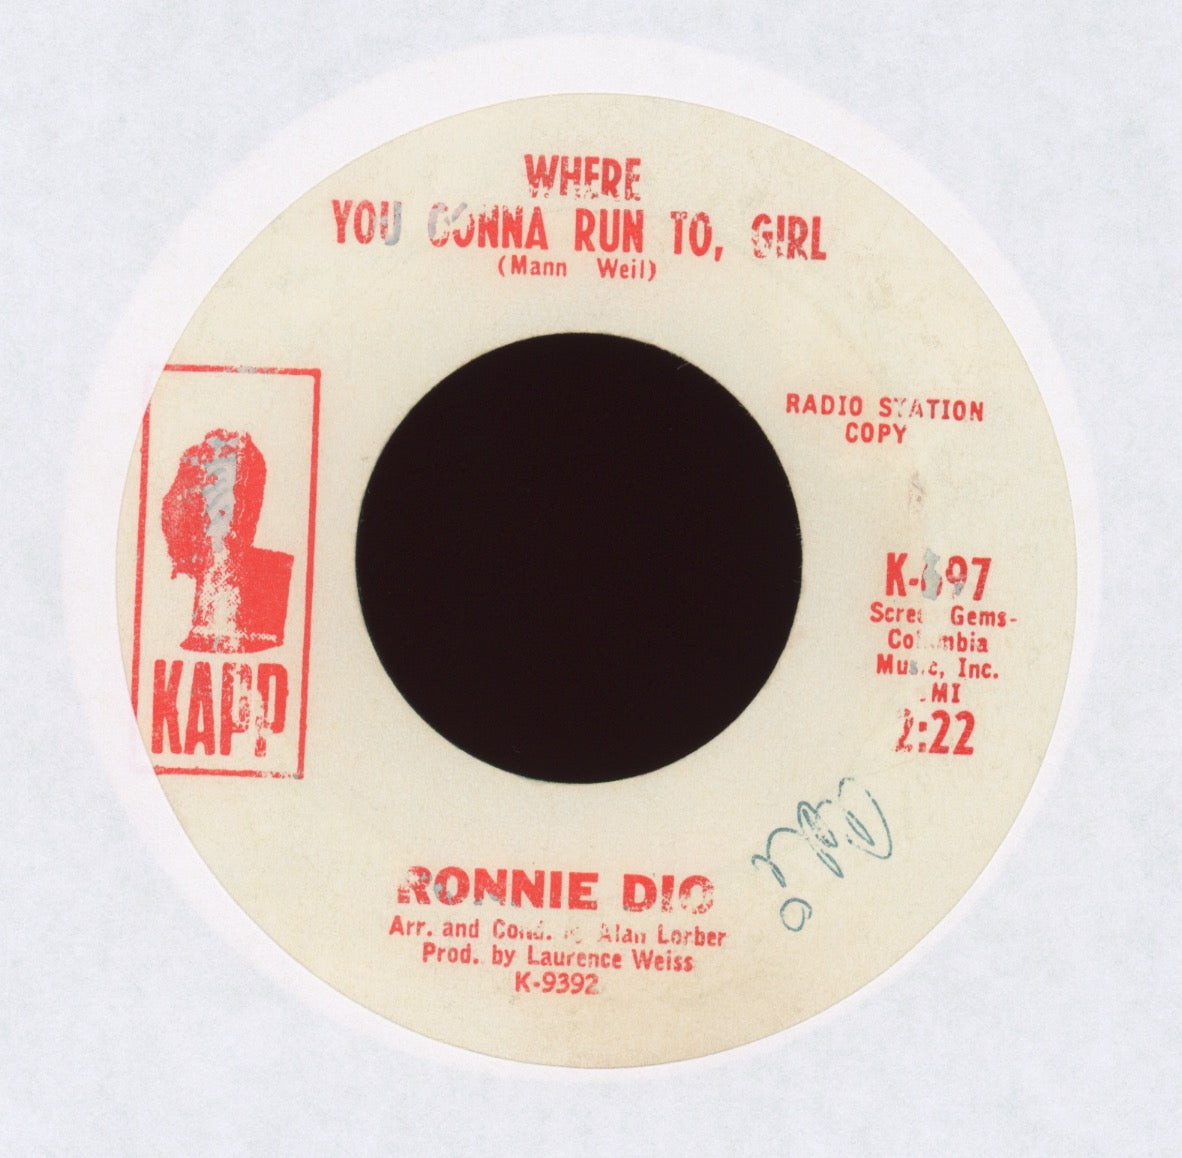 Ronnie James Dio - Where You Gonna Run to Girl on Kapp Promo